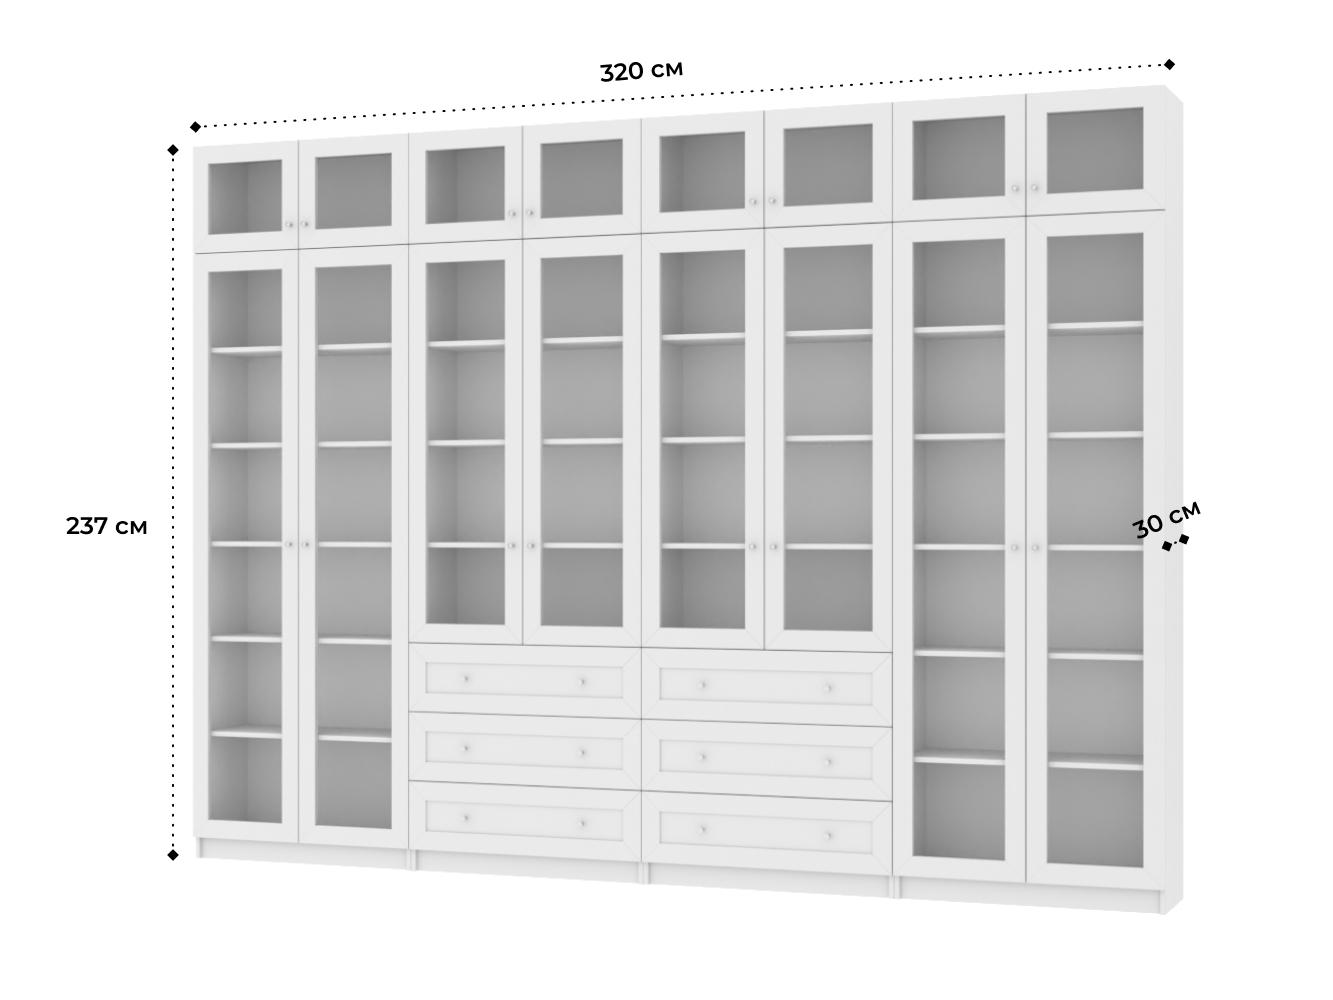  Книжный шкаф Билли 372 white ИКЕА (IKEA) изображение товара